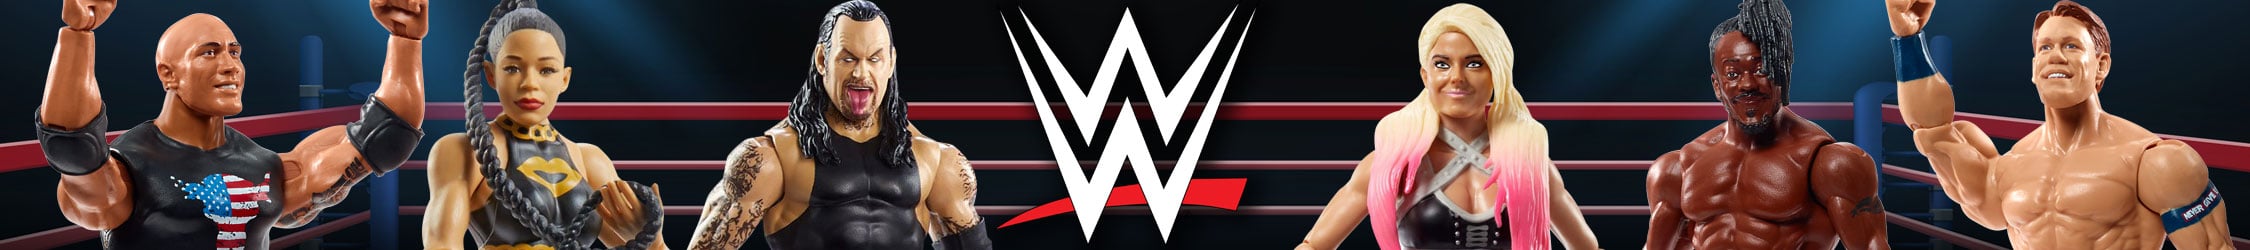 WWEbasic